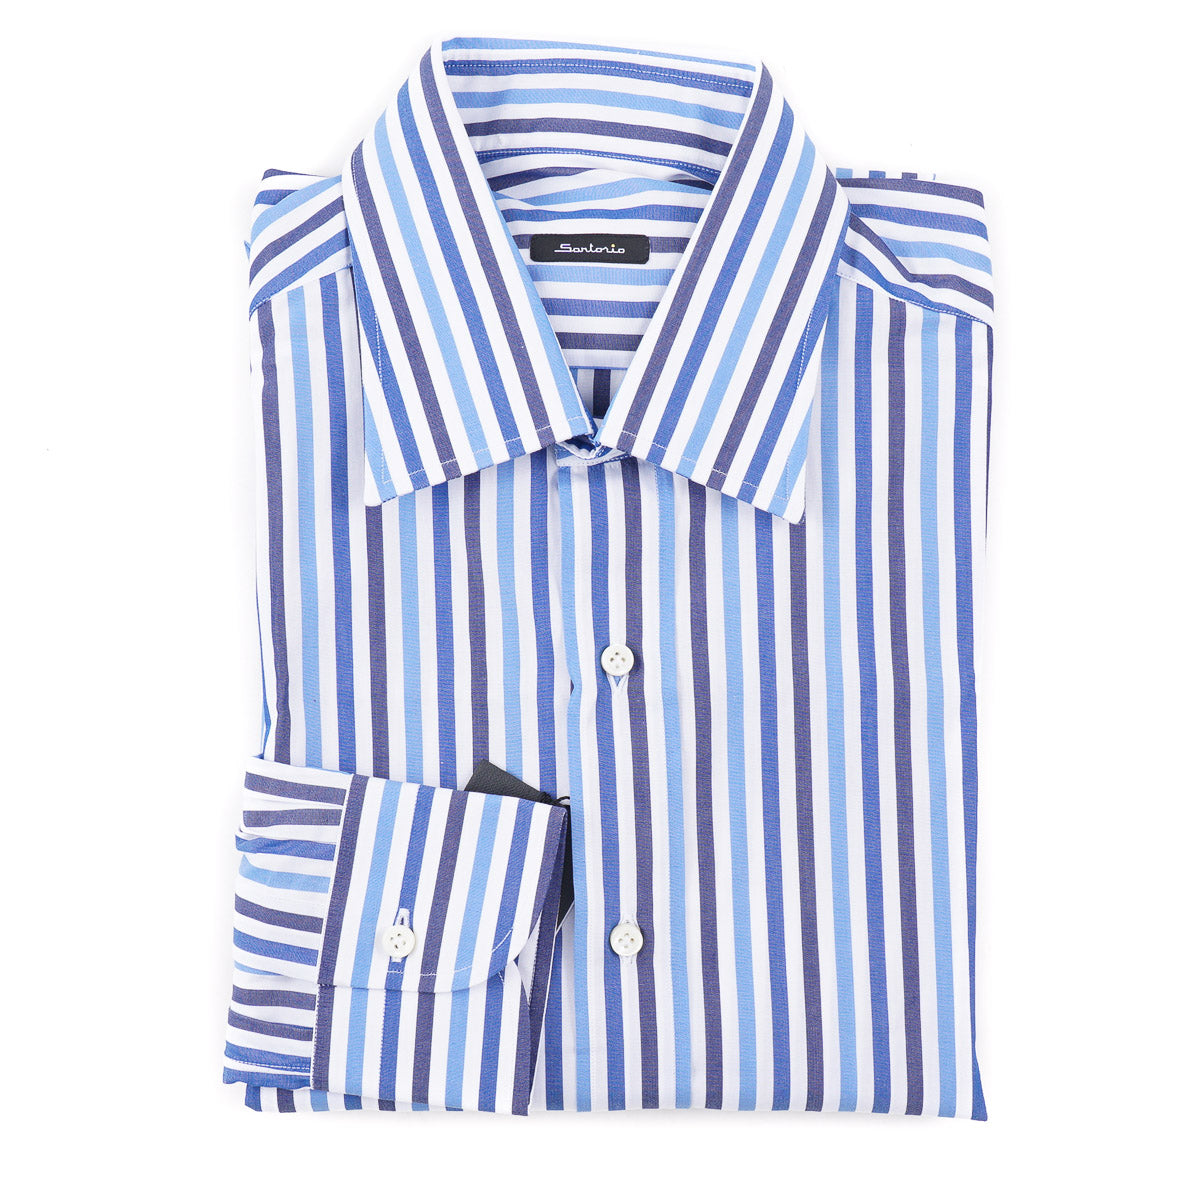 Sartorio Tailored-Fit Cotton Shirt - Top Shelf Apparel